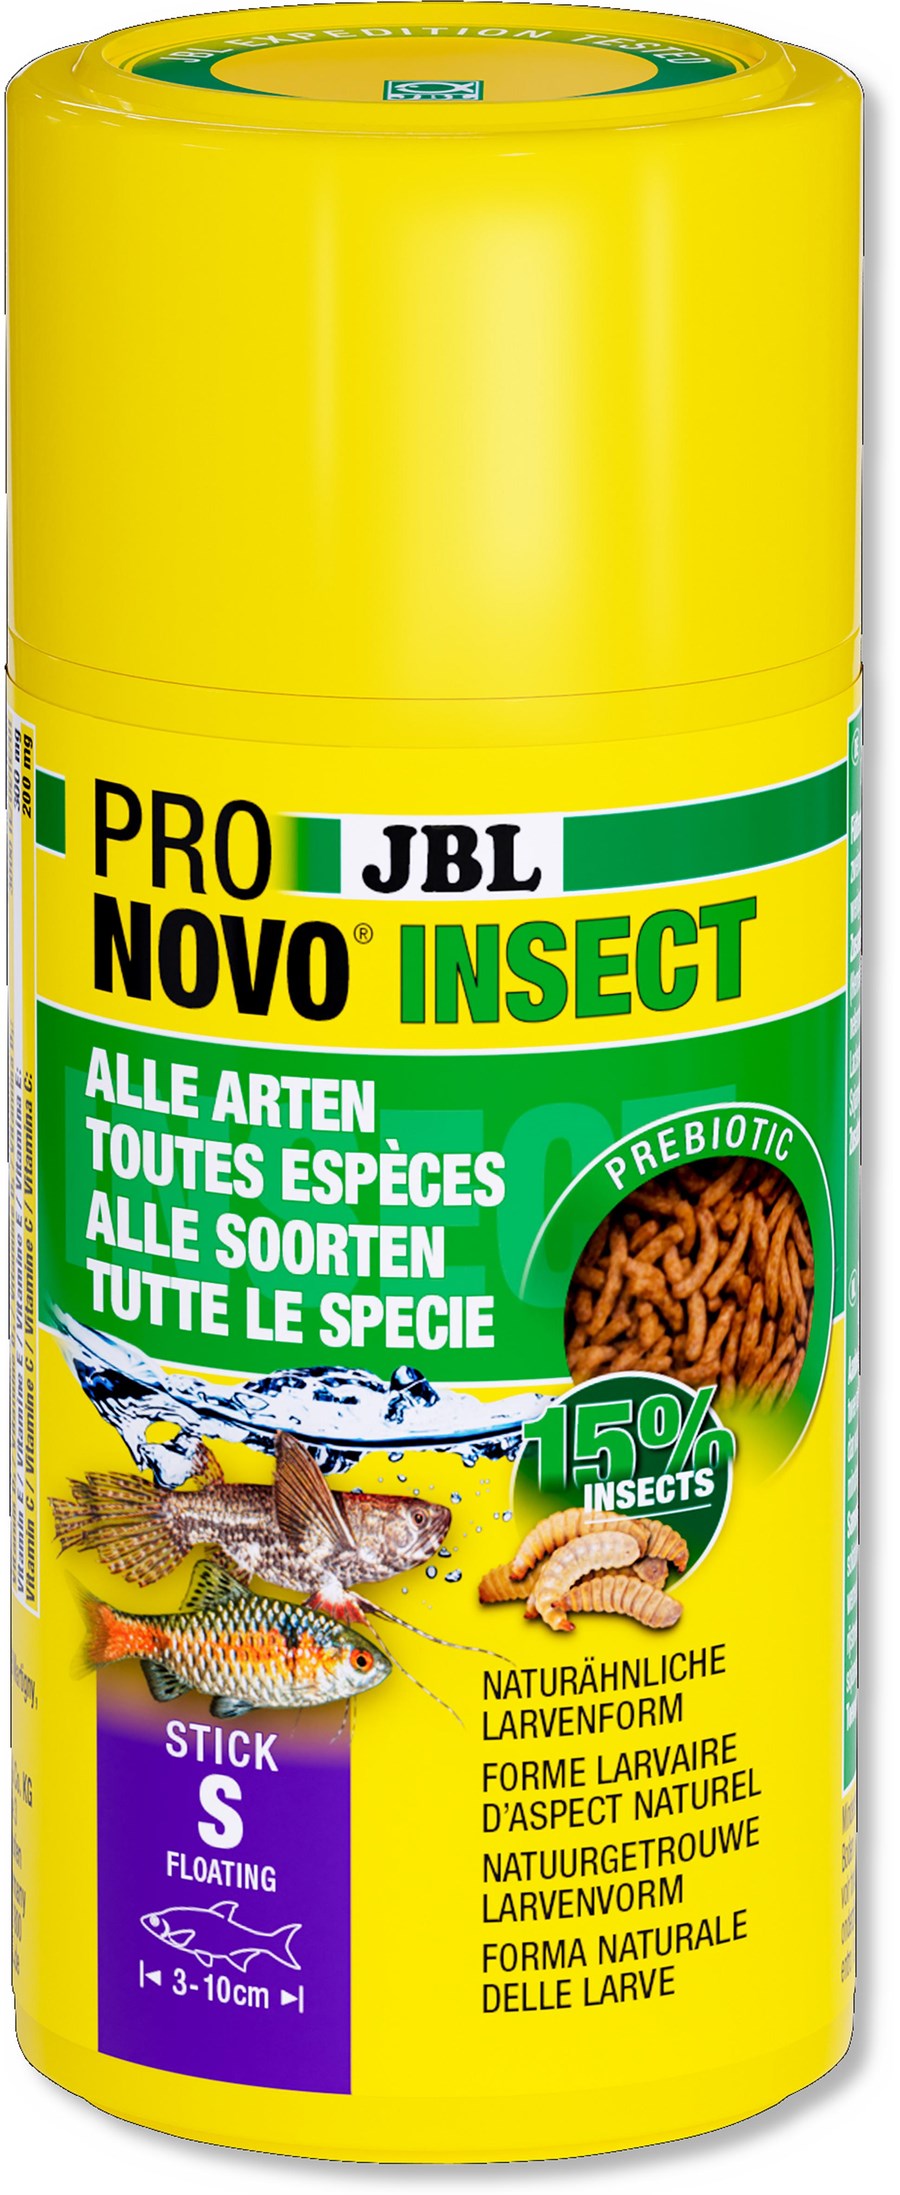 JBL PRONOVO INSECT STICK S 250ml +